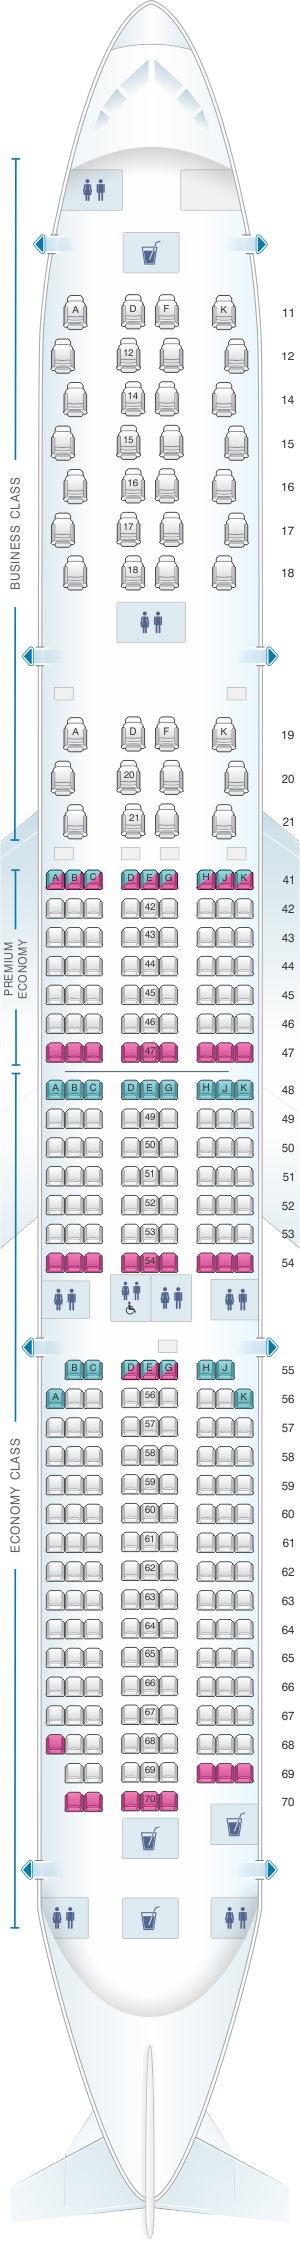 Seat Map Singapore Airlines Airbus A350 900 config.2 | SeatMaestro